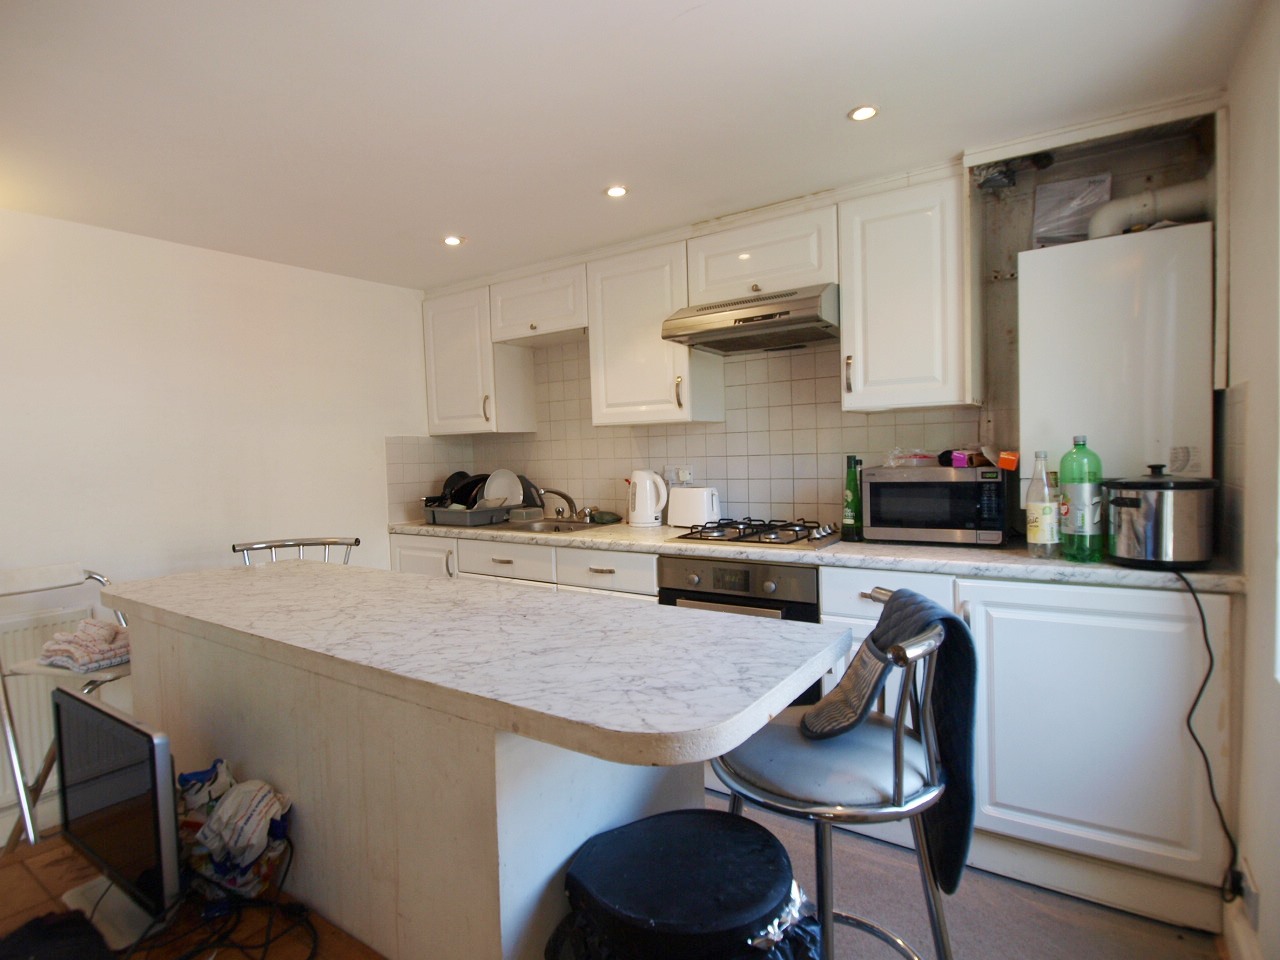 3 Bedroom Flat to rent in Kings Cross, London, WC1X